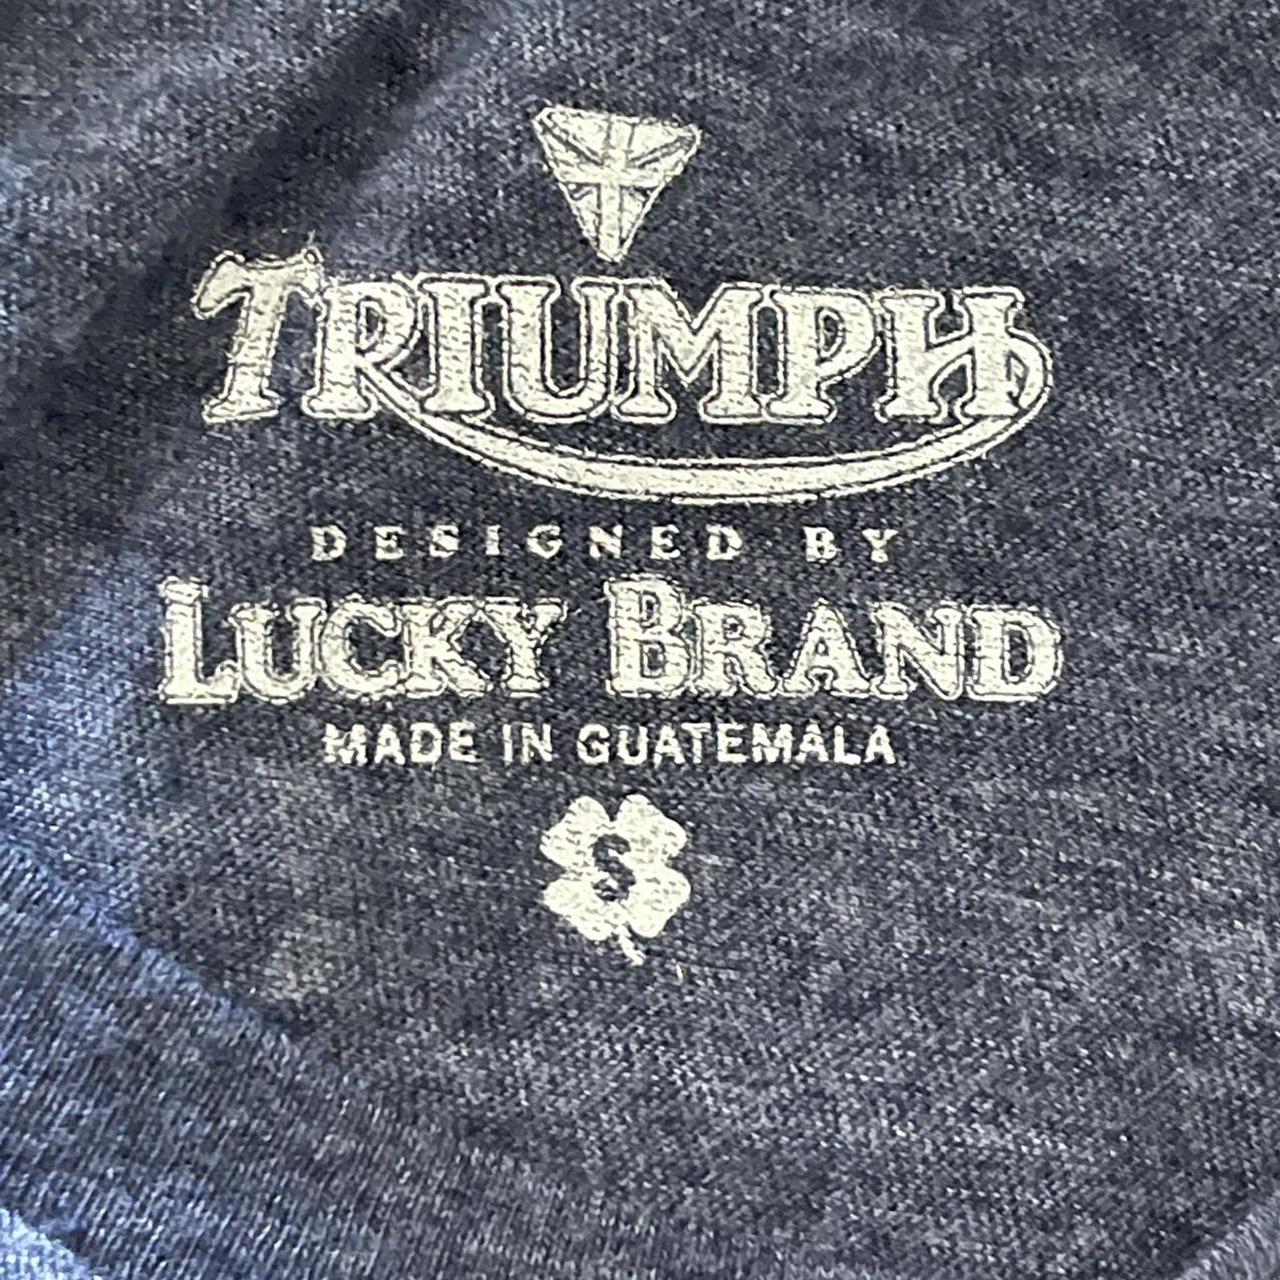 Vintage Triumph x Lucky Brand crewneck pullover - Depop